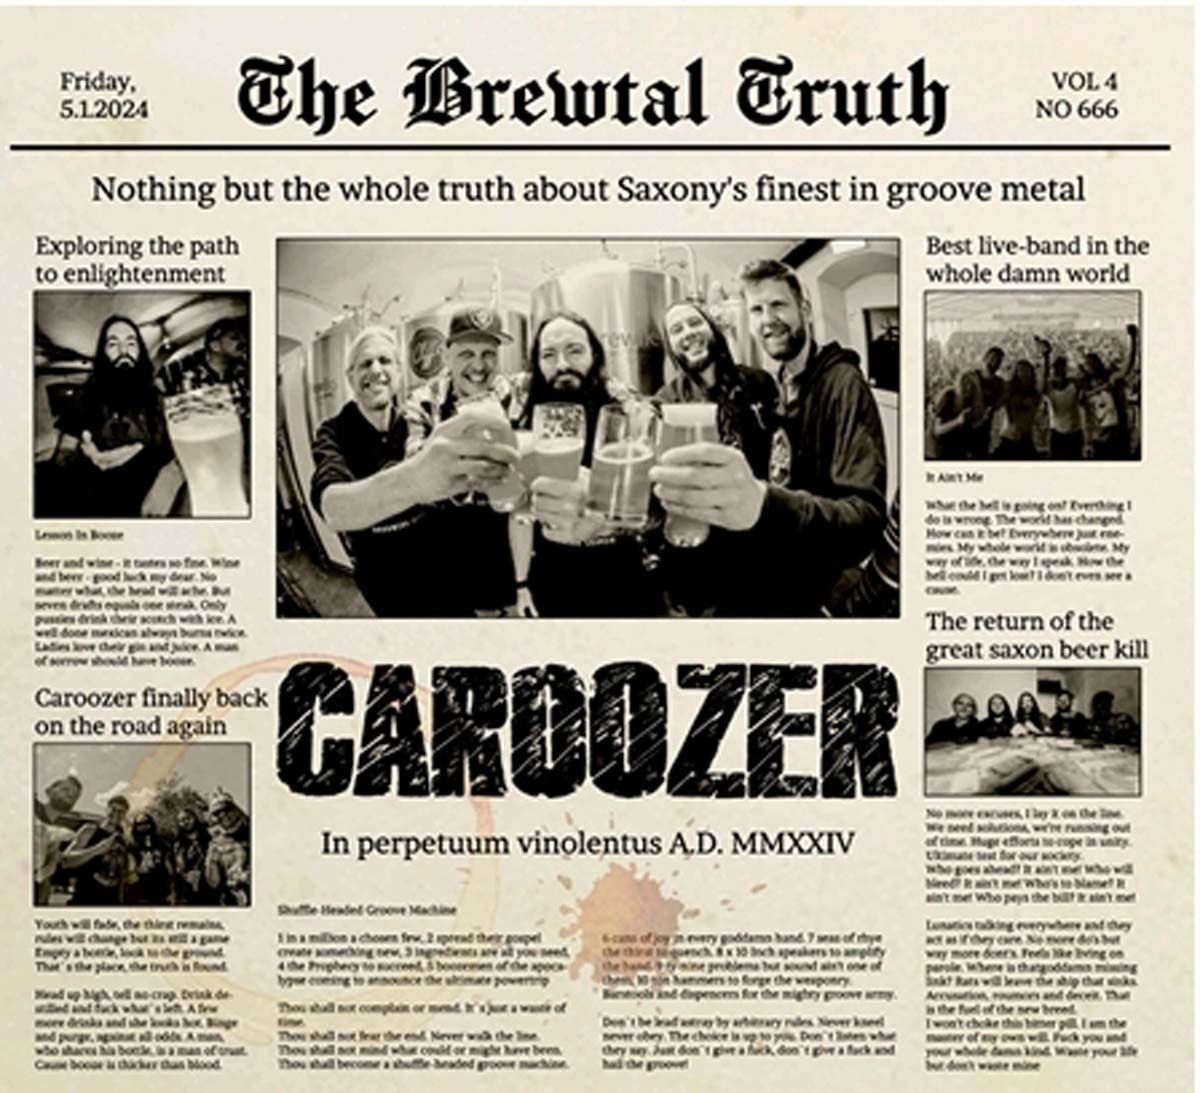 Caroozer - The Brewtal Truth